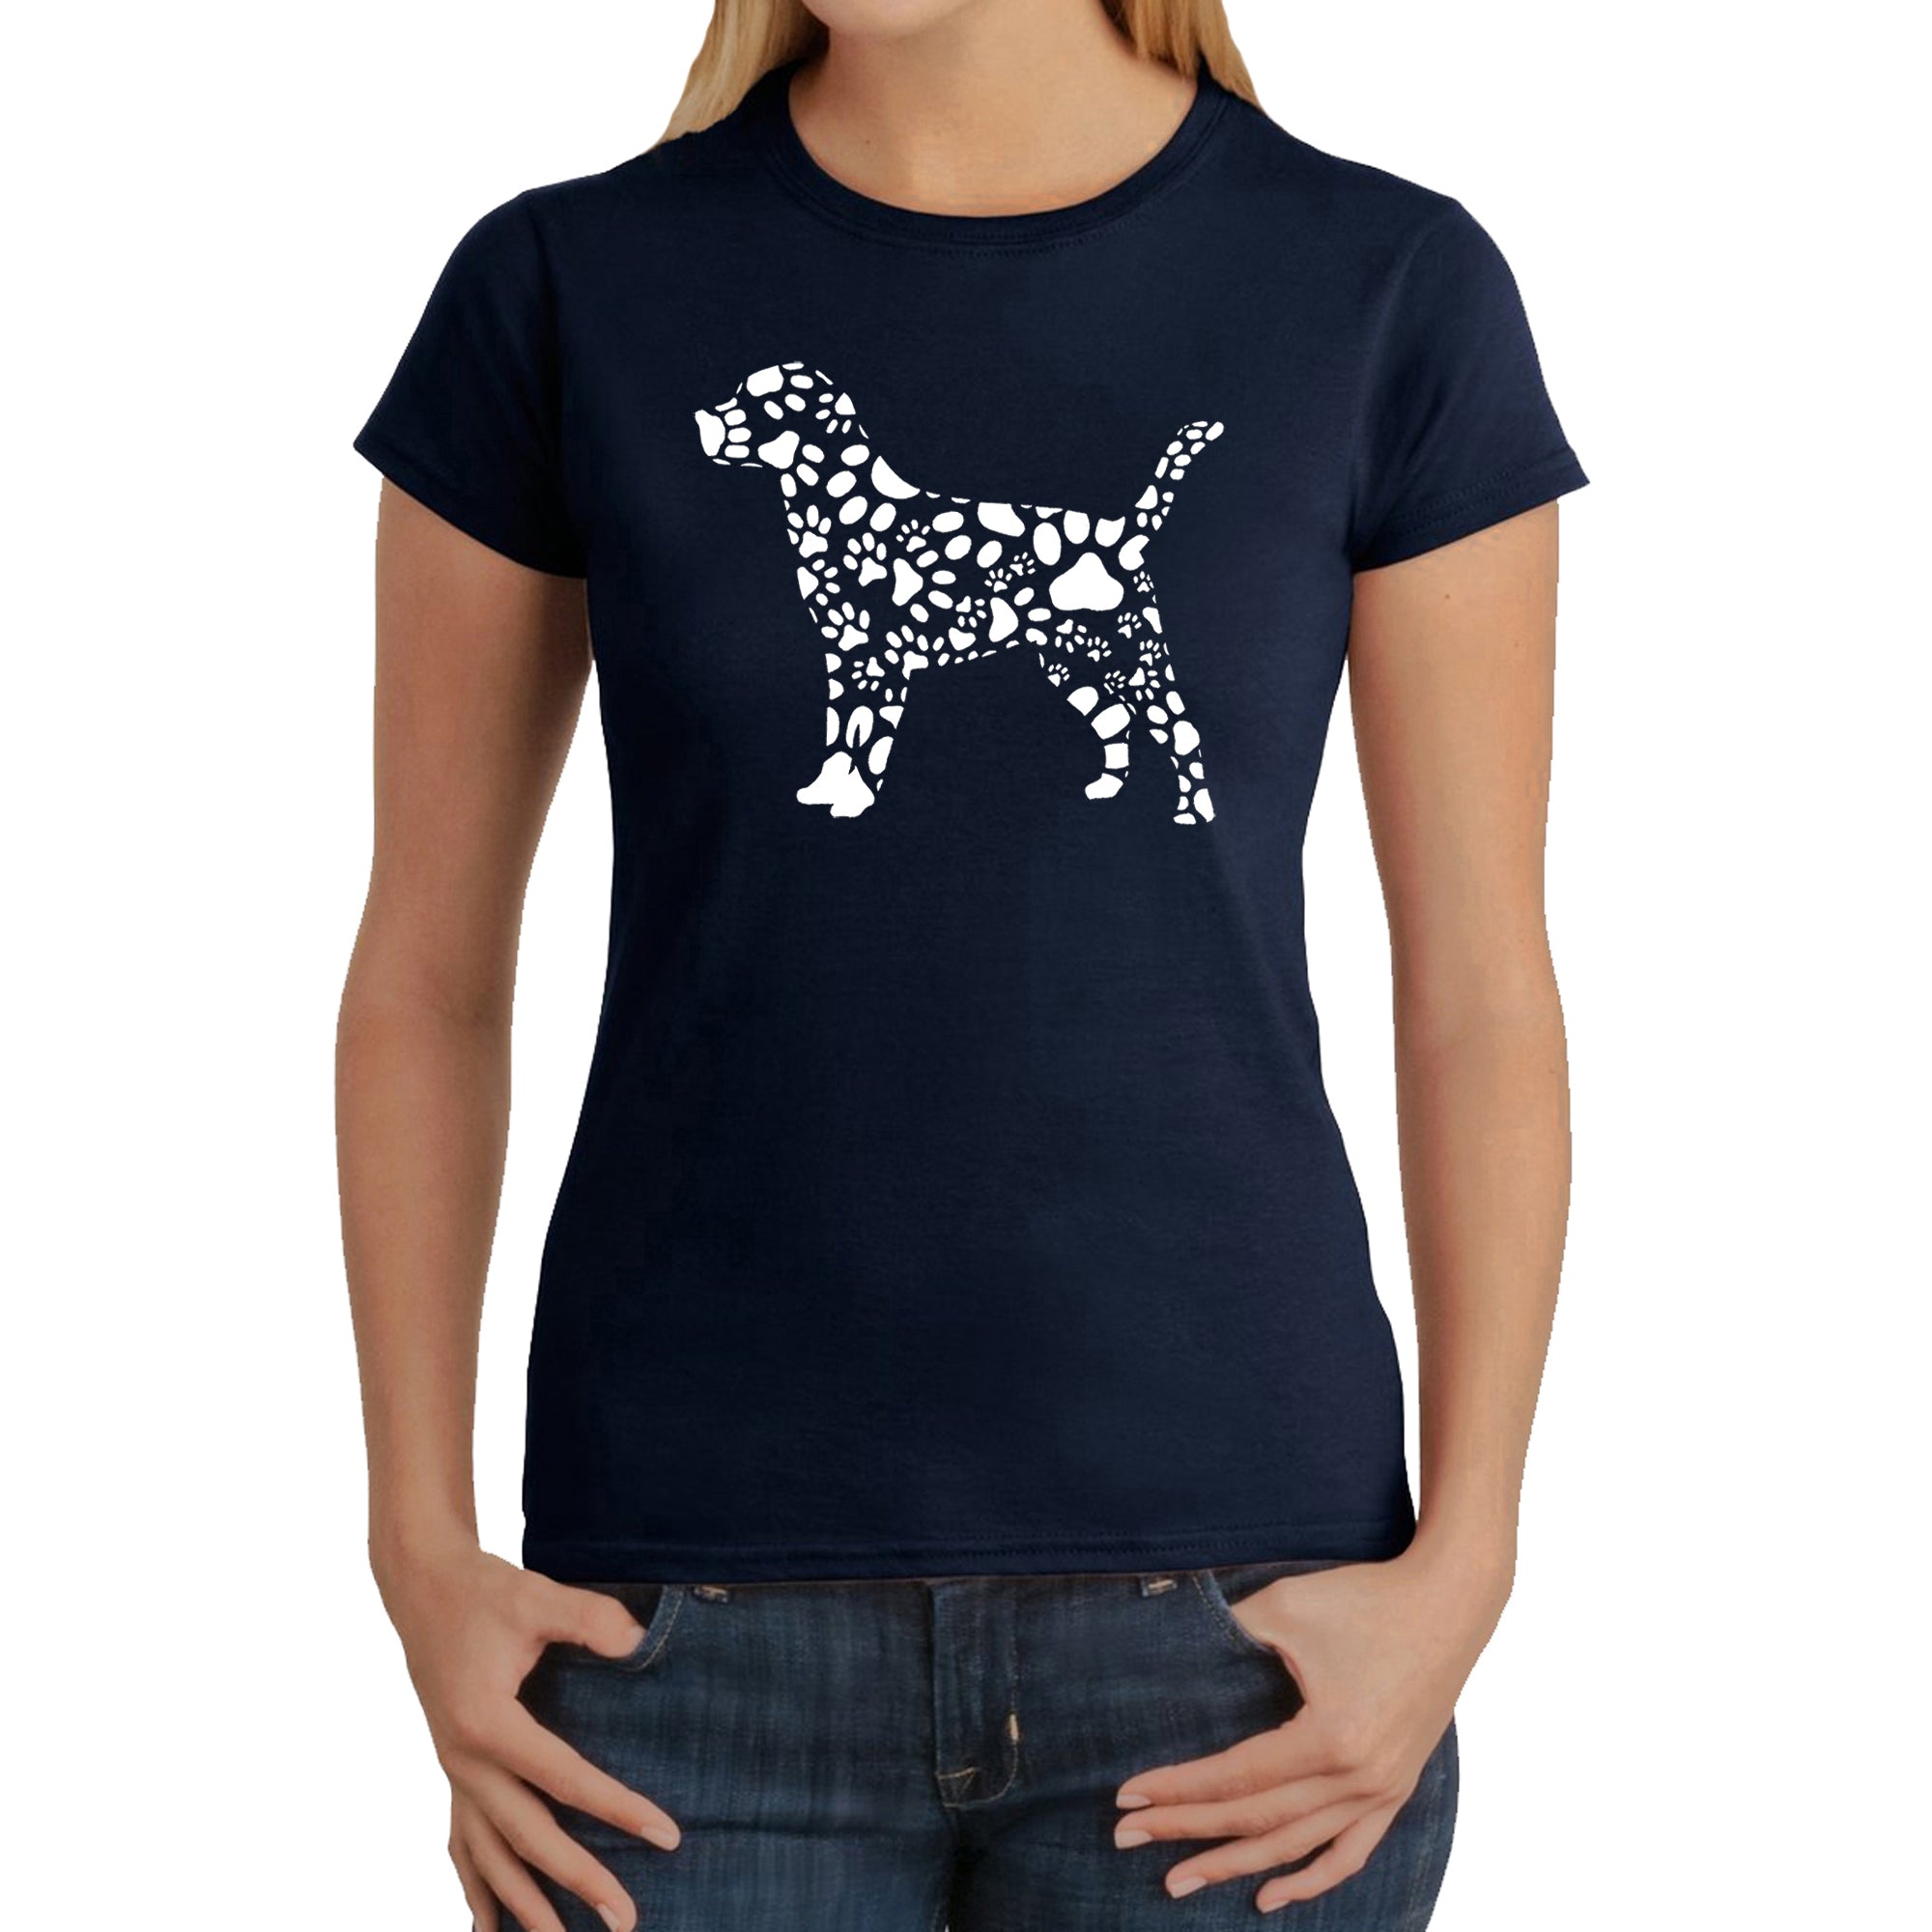 Dog Paw Prints - Women's Word Art T-Shirt - Navy - XS